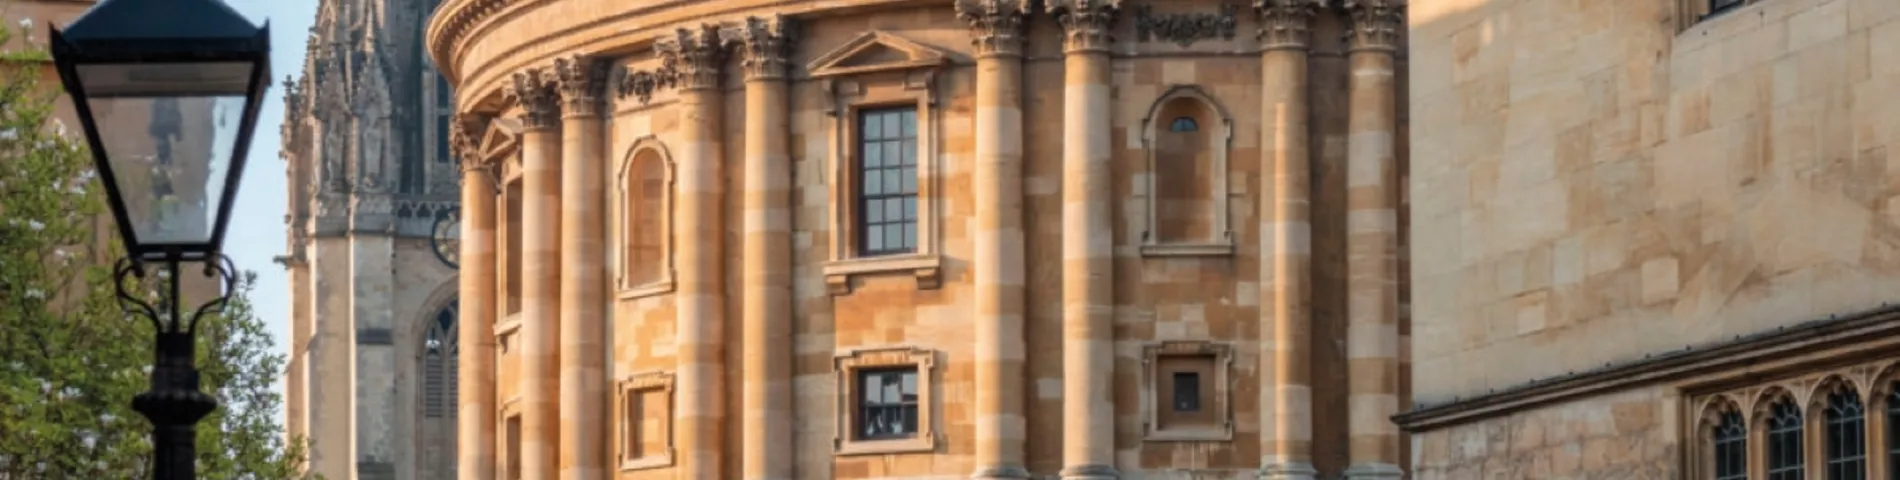 Oxford Royale Academy 사진 1